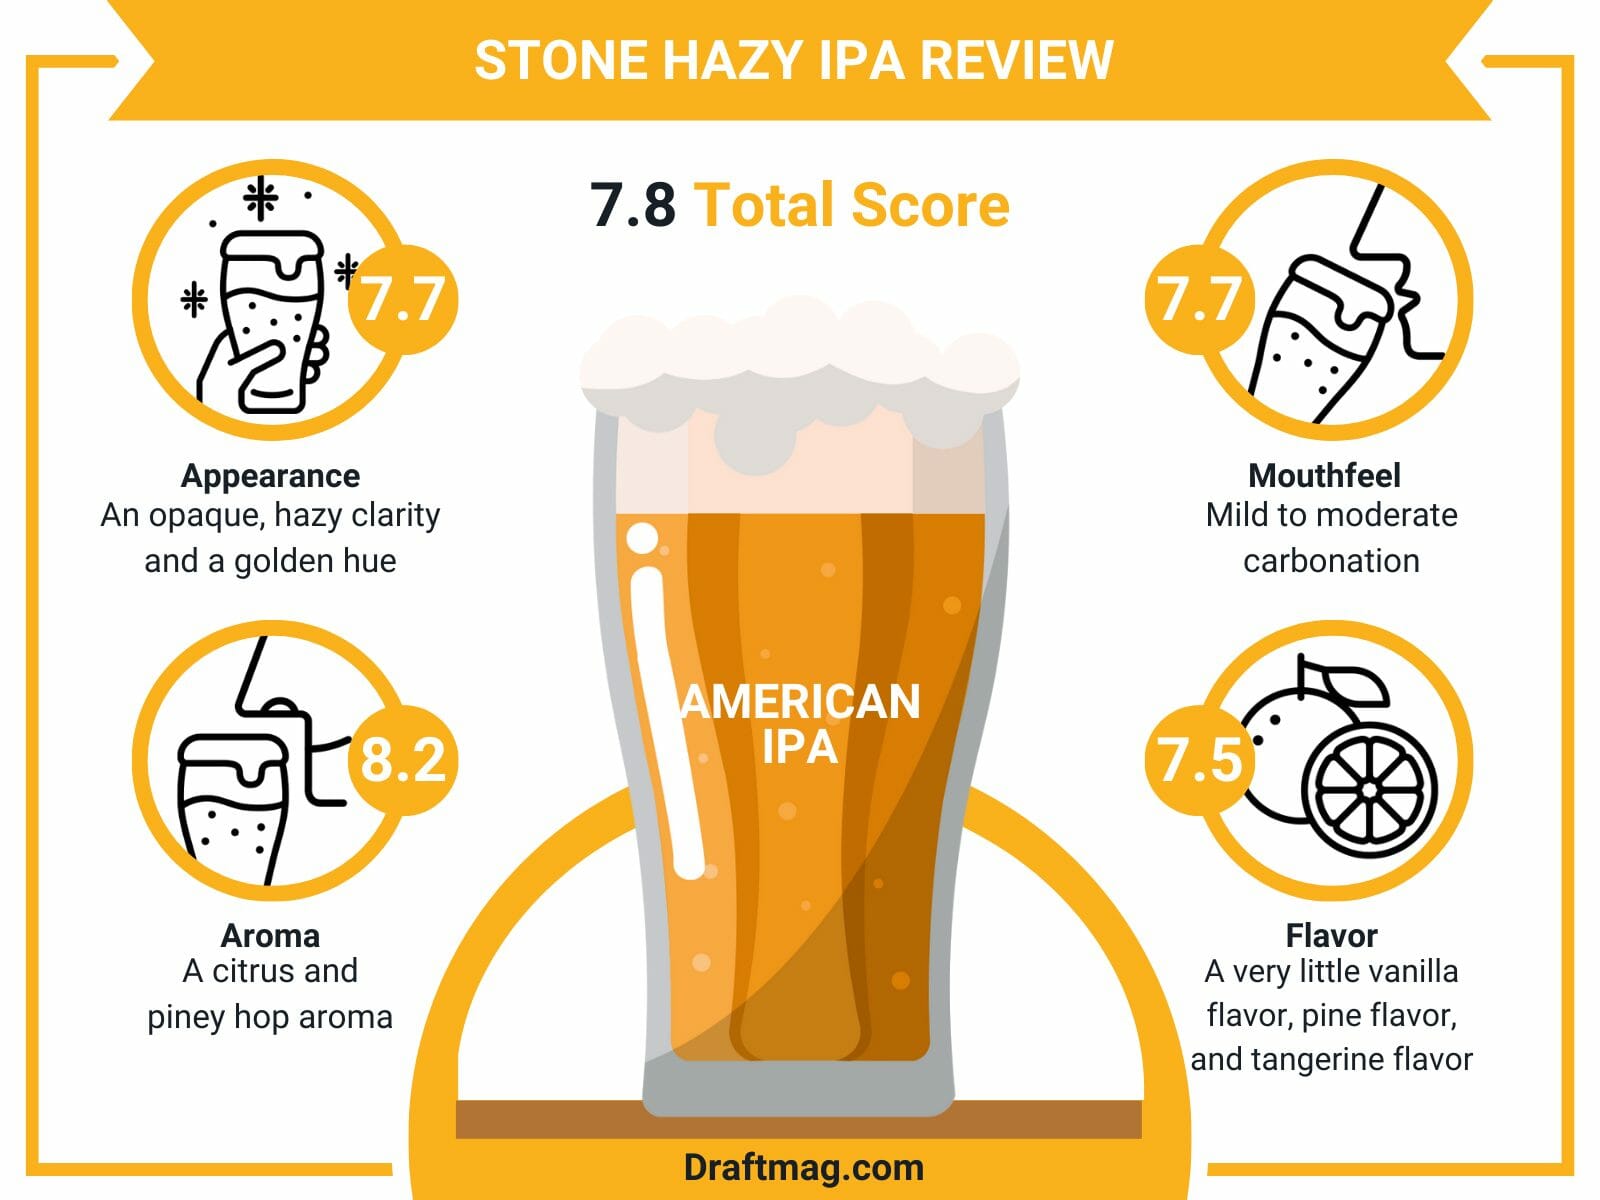 Stone Hazy IPA Review Infographic